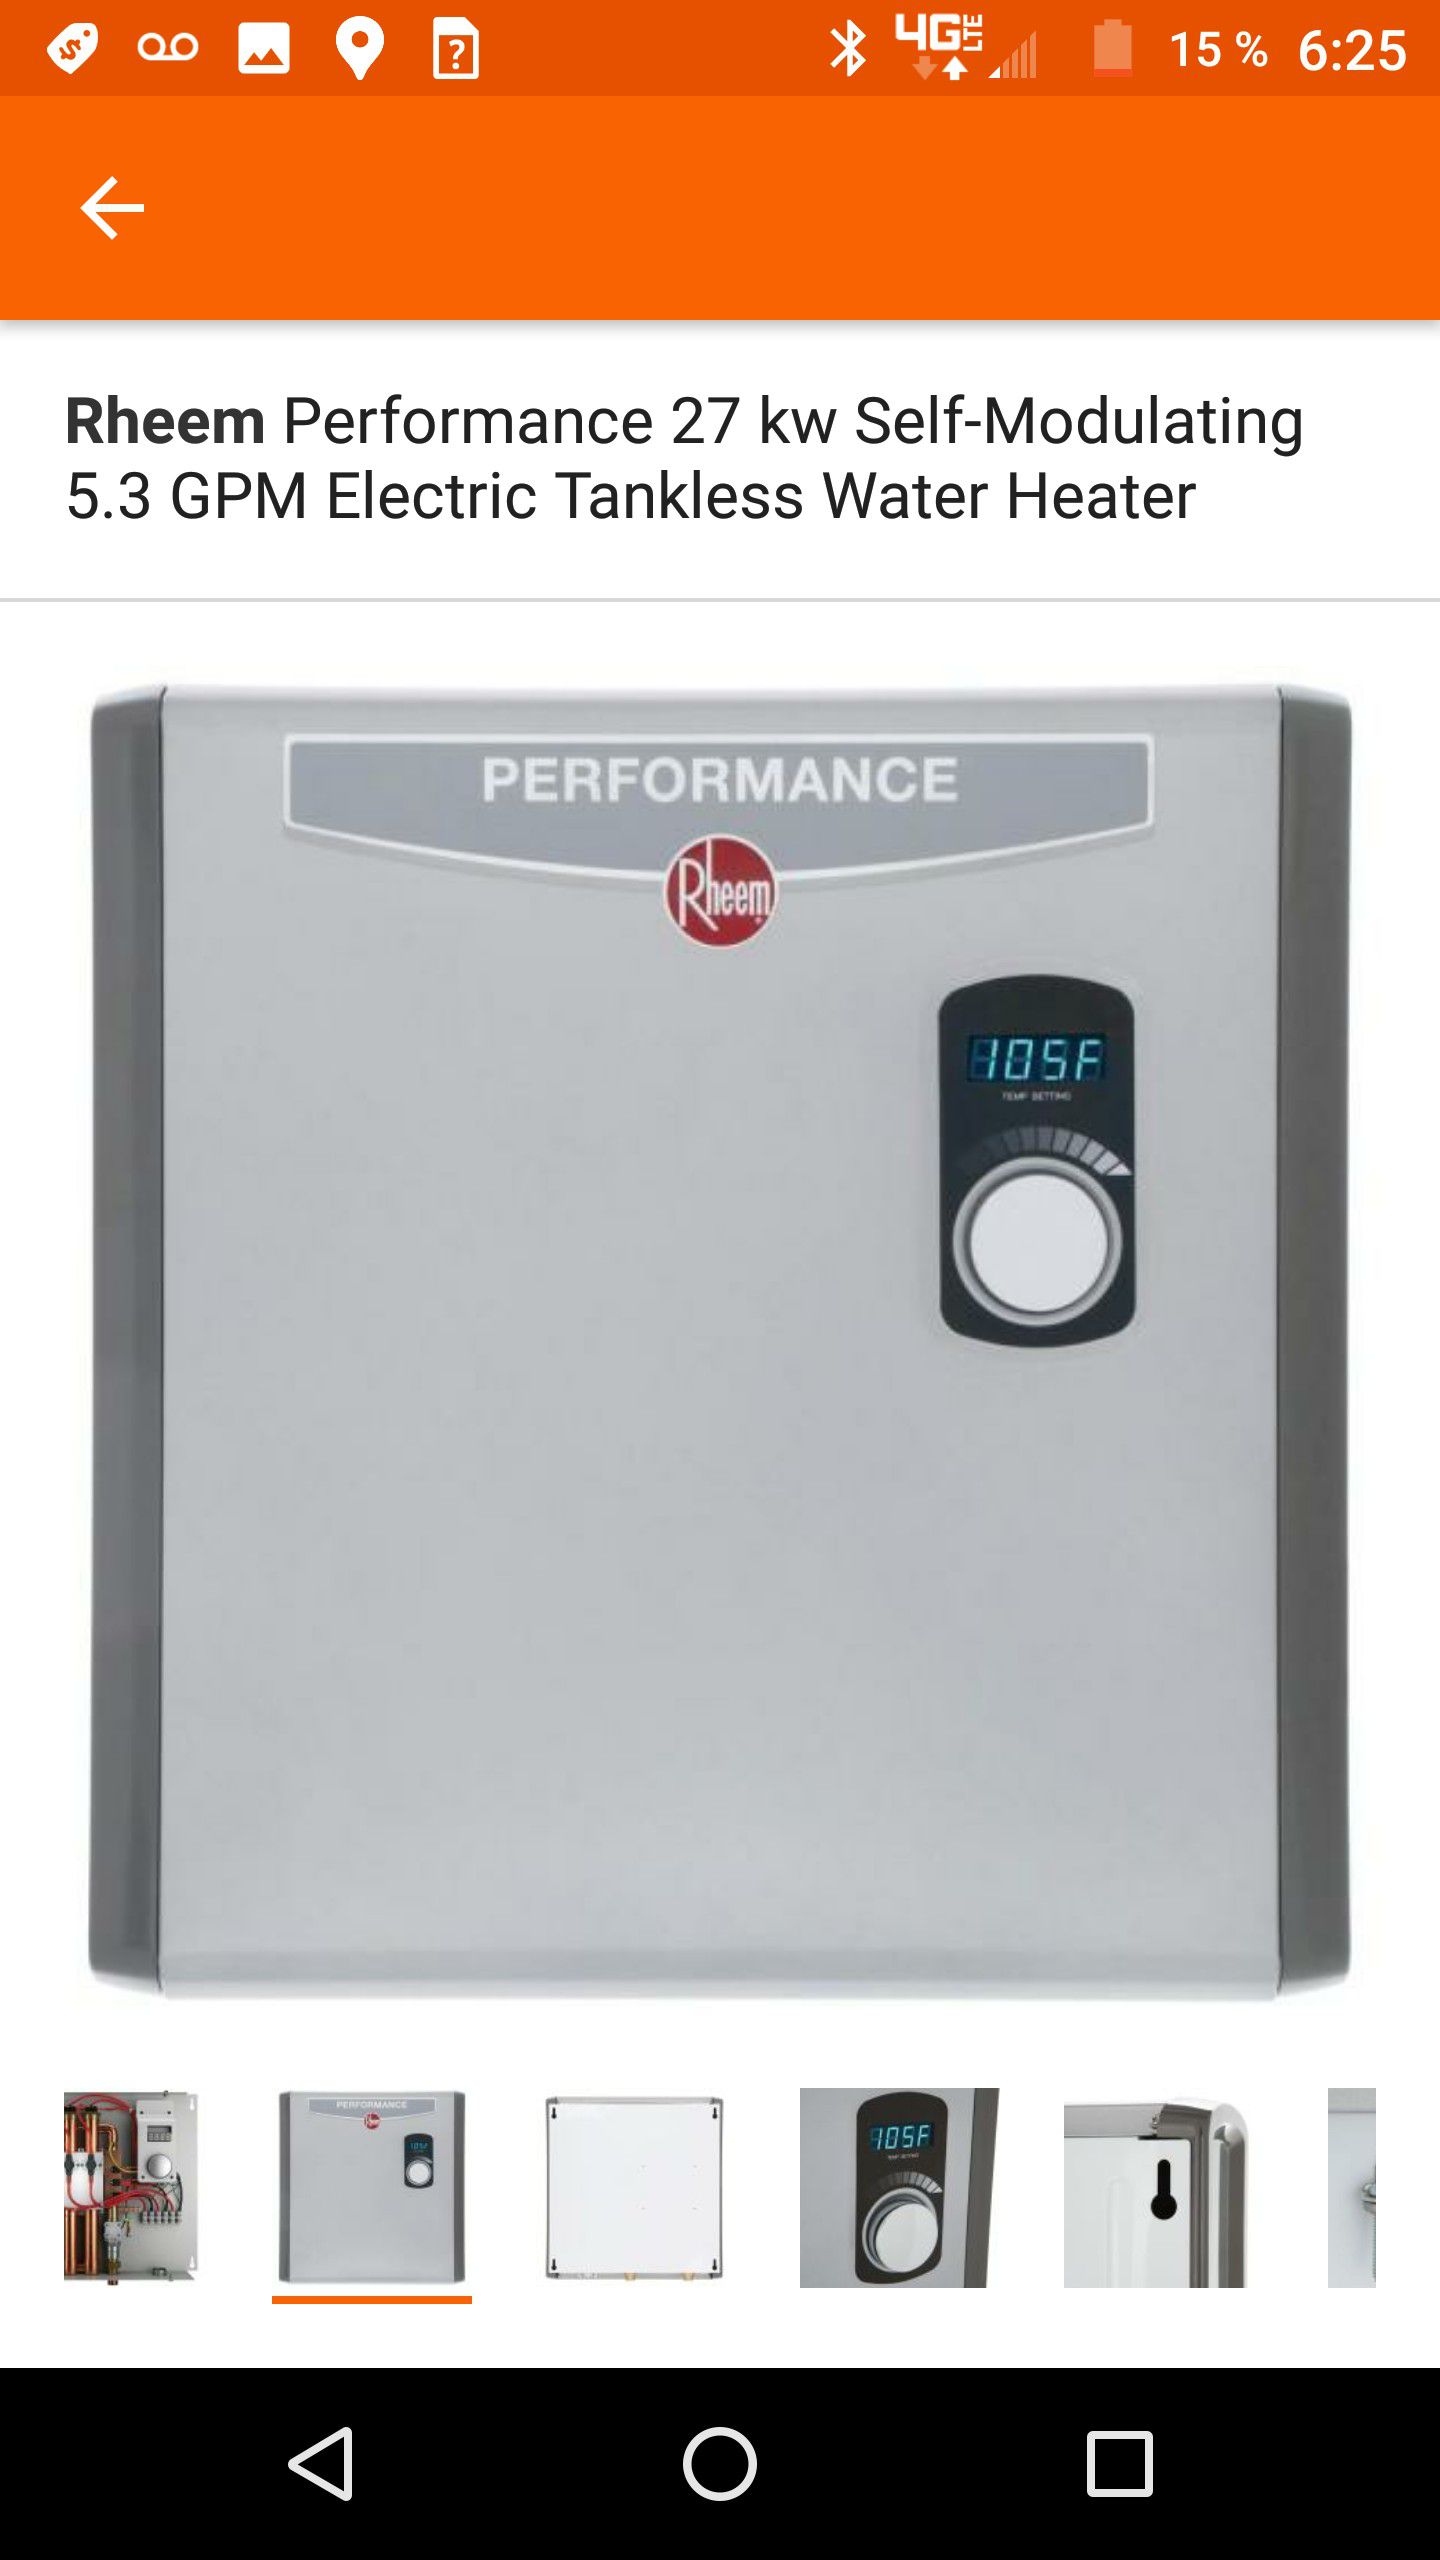 Rheem Performance 27 kw Self-Modulating 5.3 GPM Electric Tankless Water Heater